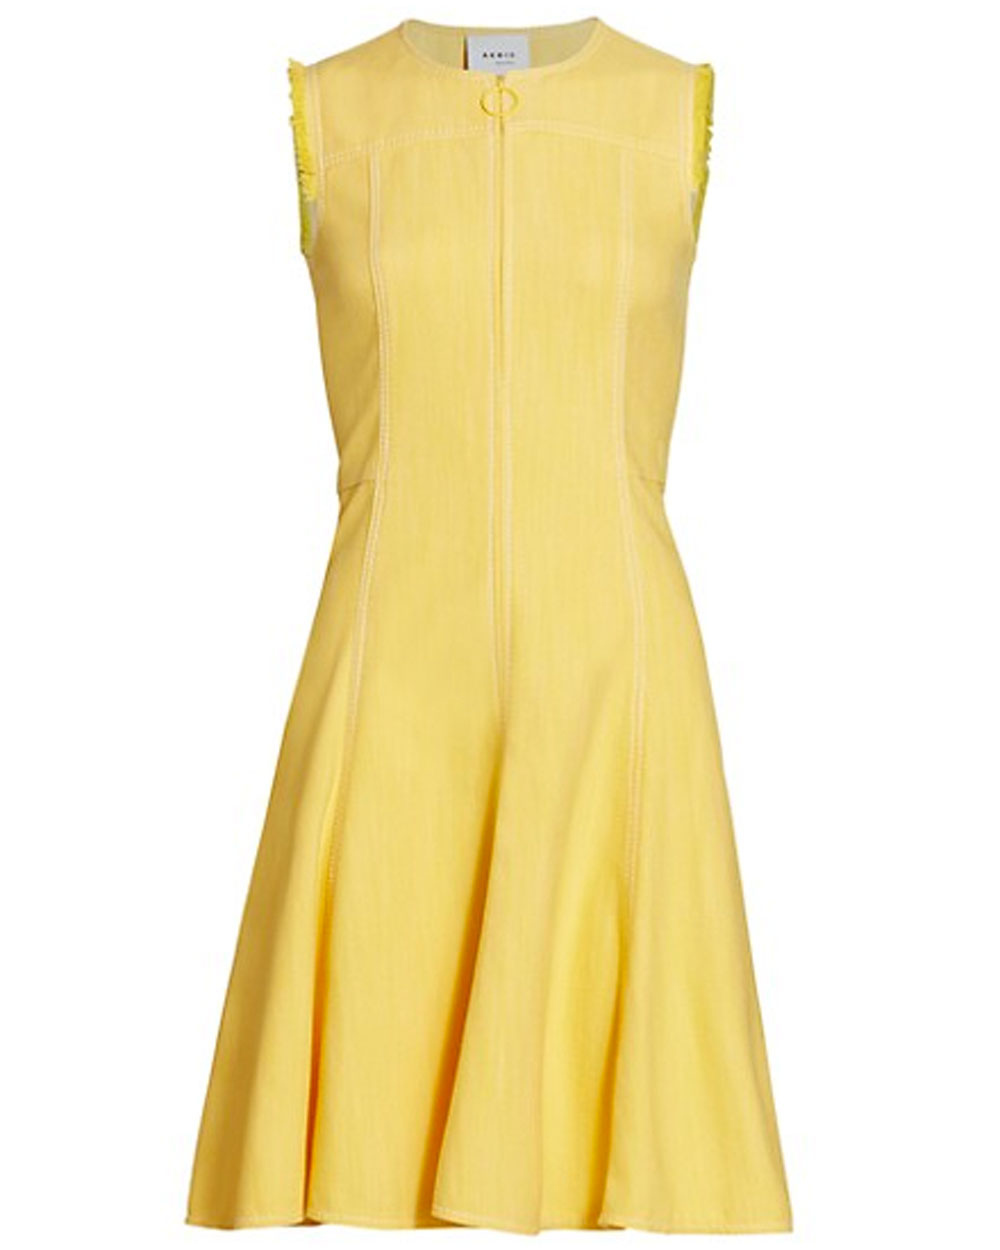 Vivid Yellow Sleeveless Washed Denim Dress